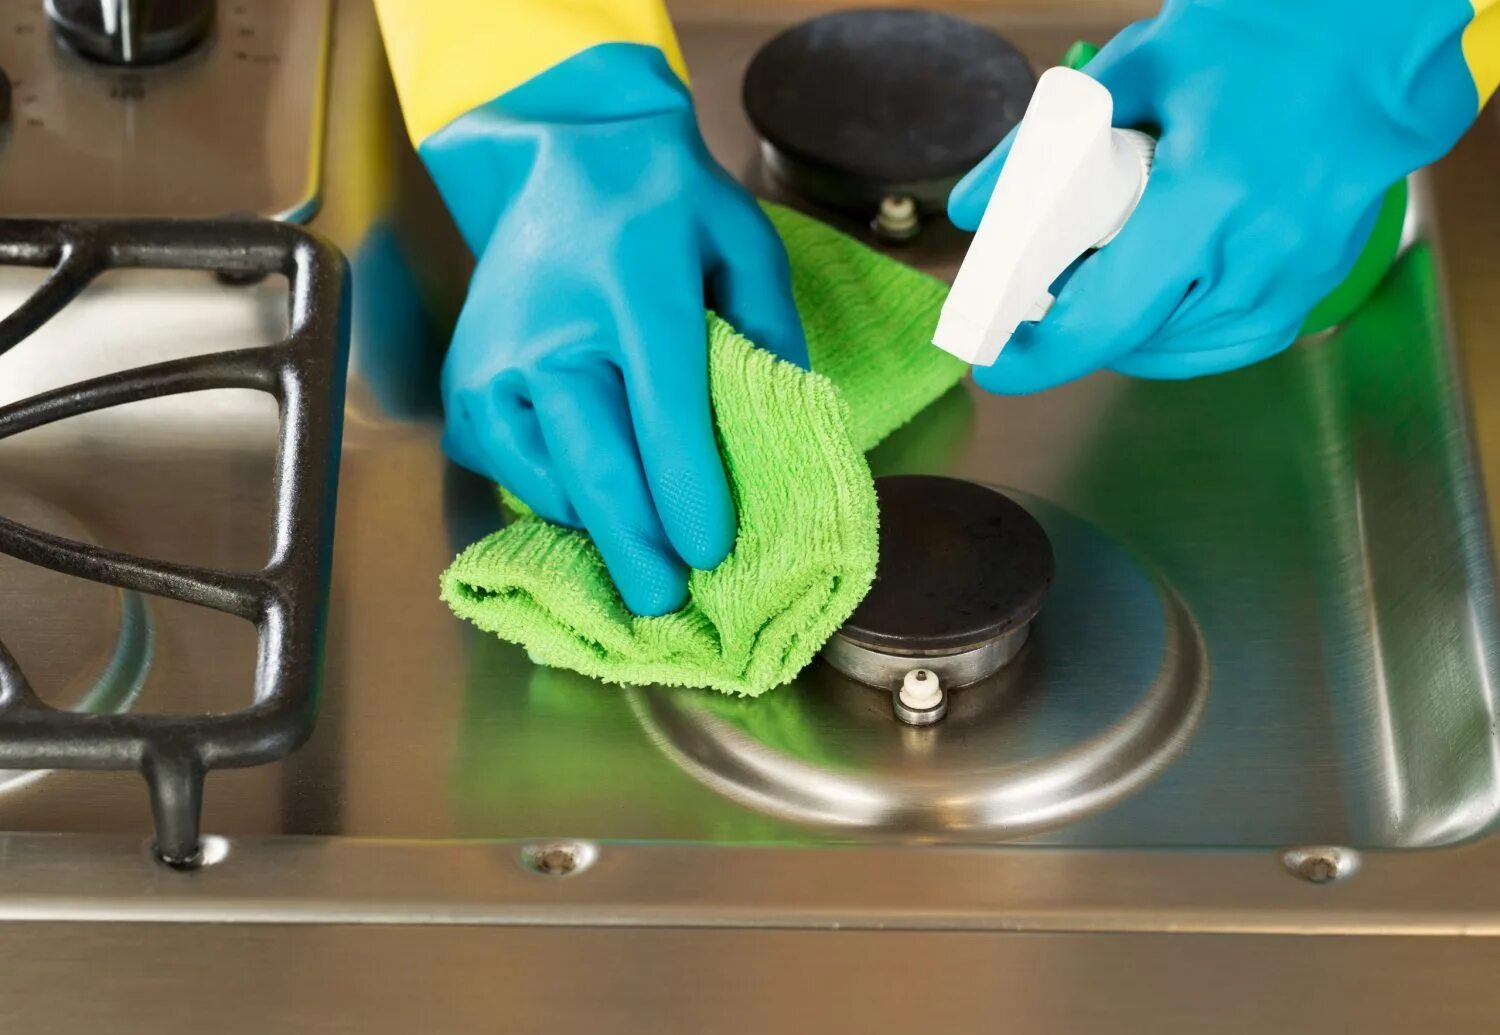 Oven clean. Мытье плиты. Мытье газовой плиты. Чистка кухонной плиты. Мытье кухонного гарнитура.